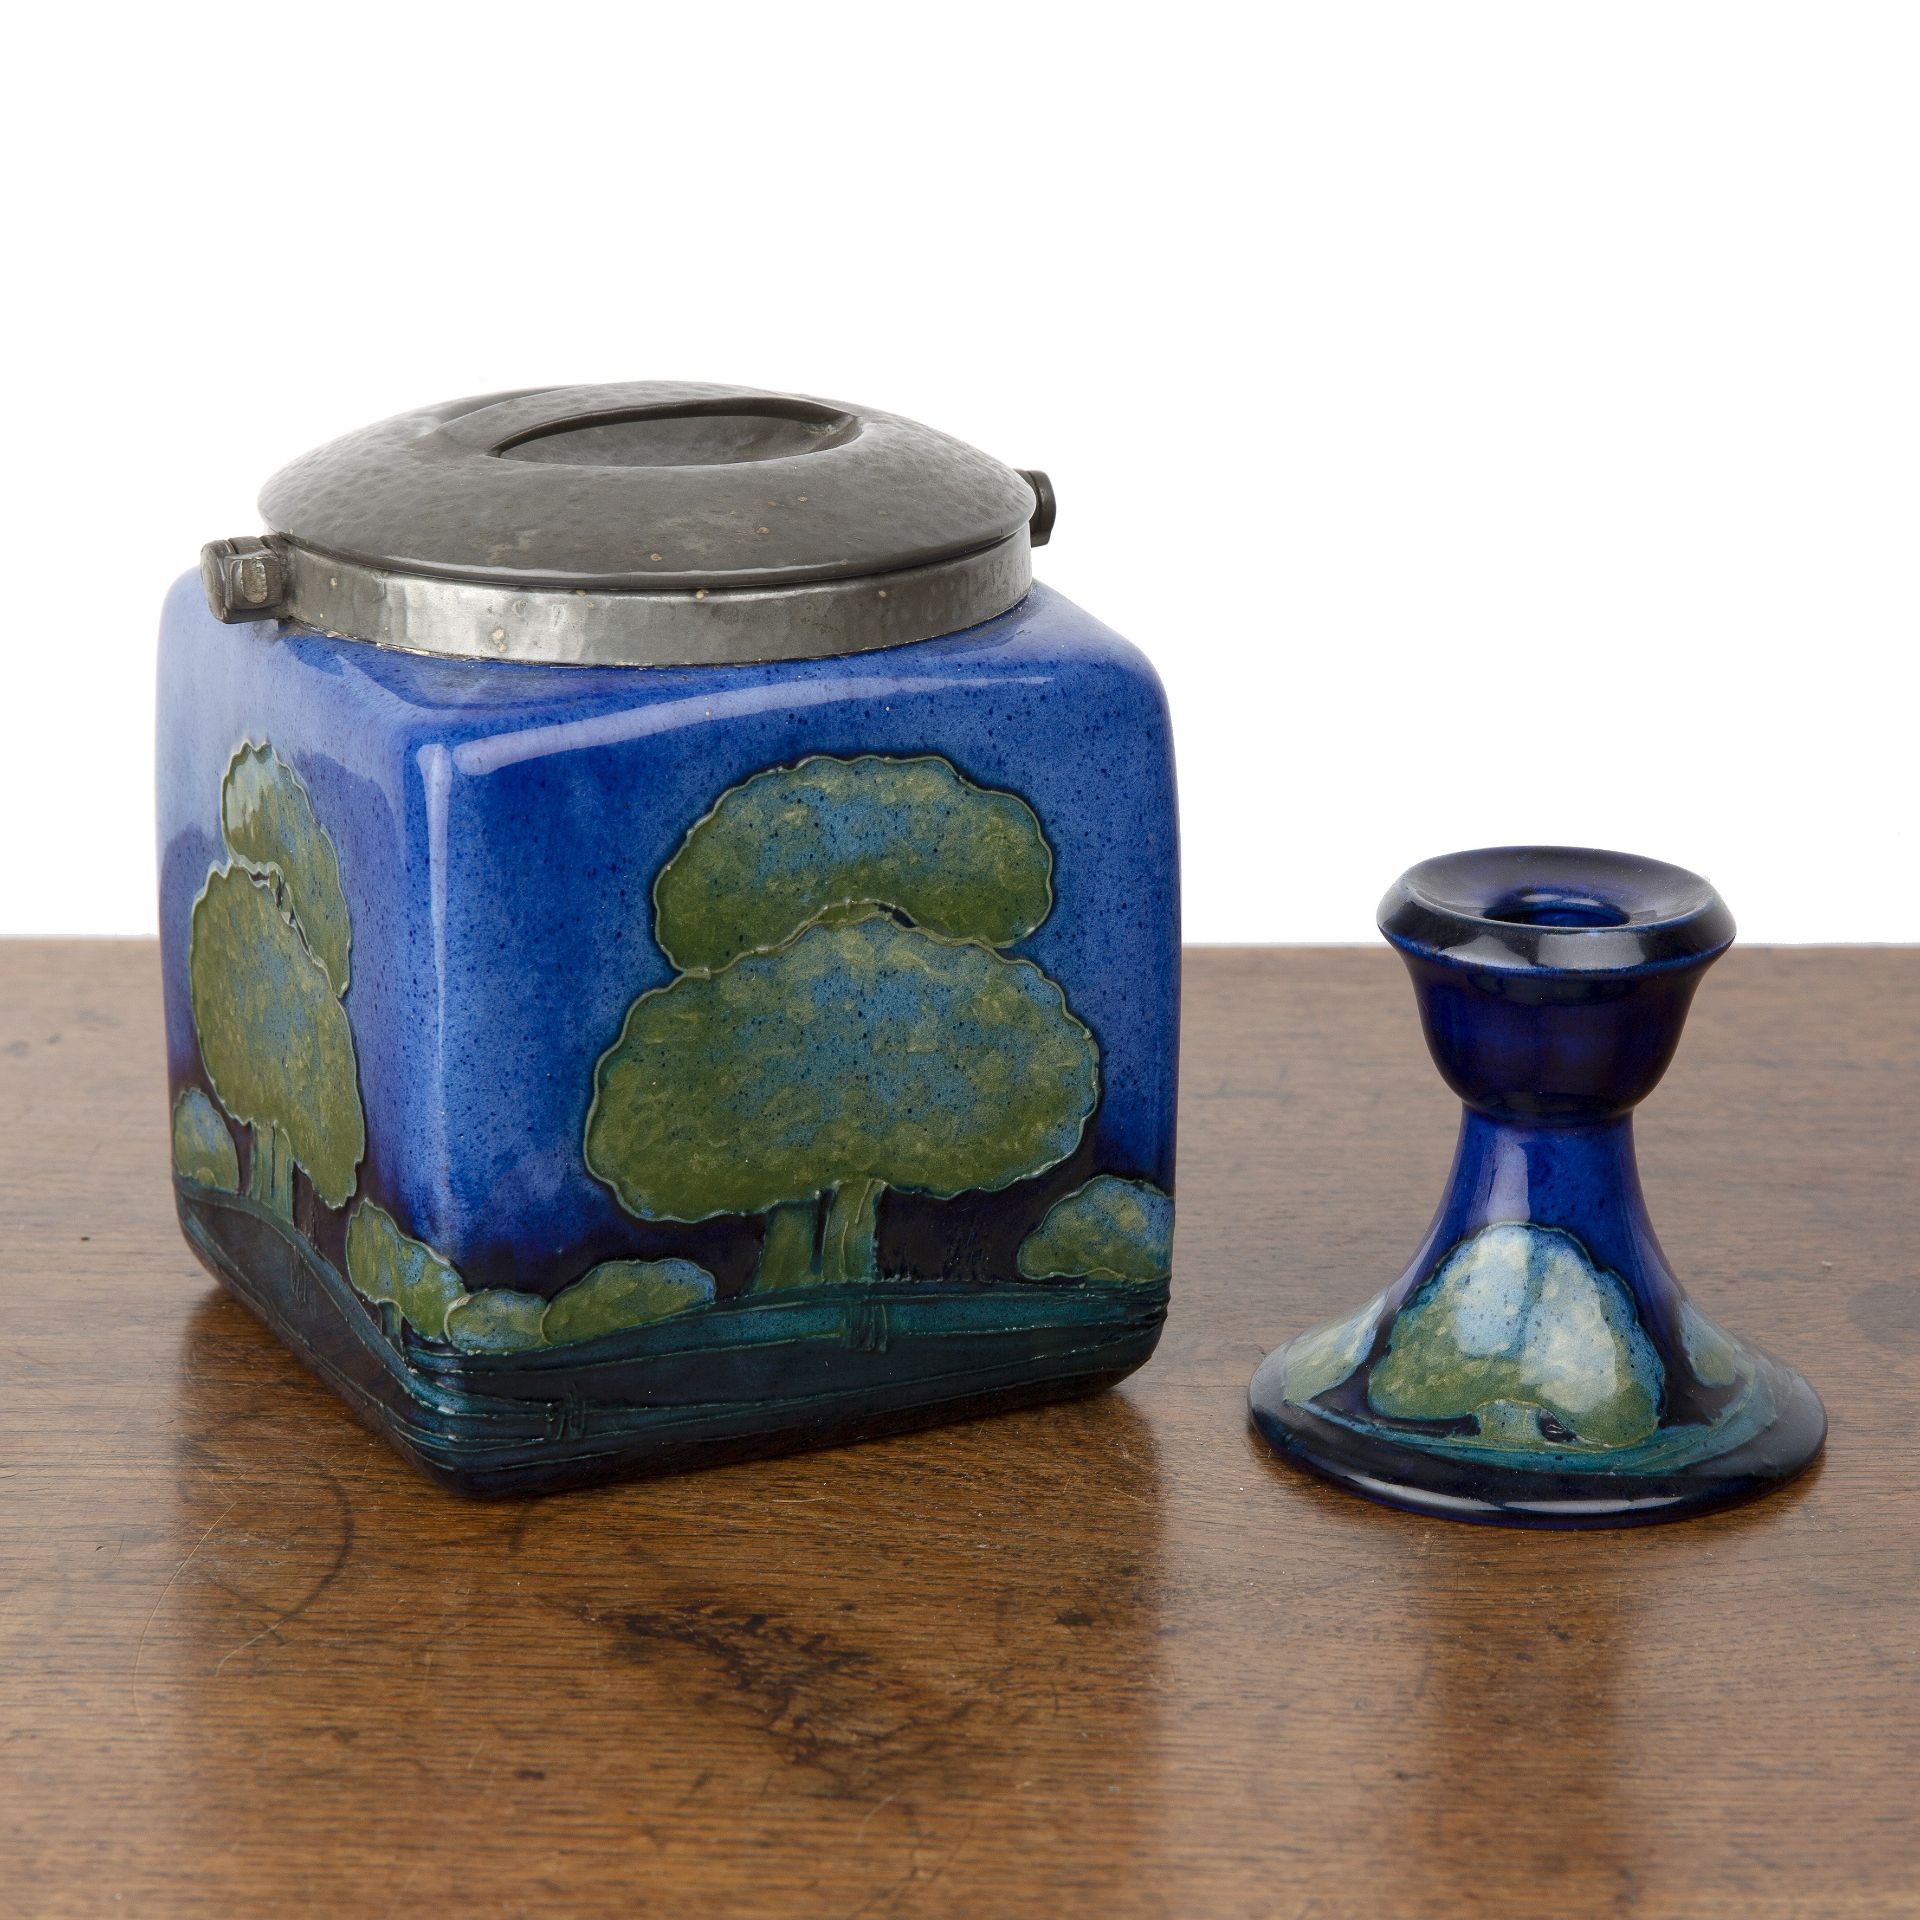 William Moorcroft (1872-1945) for Moorcroft Pottery 'Moonlit blue' biscuit barrel or jar with beaten - Image 3 of 22